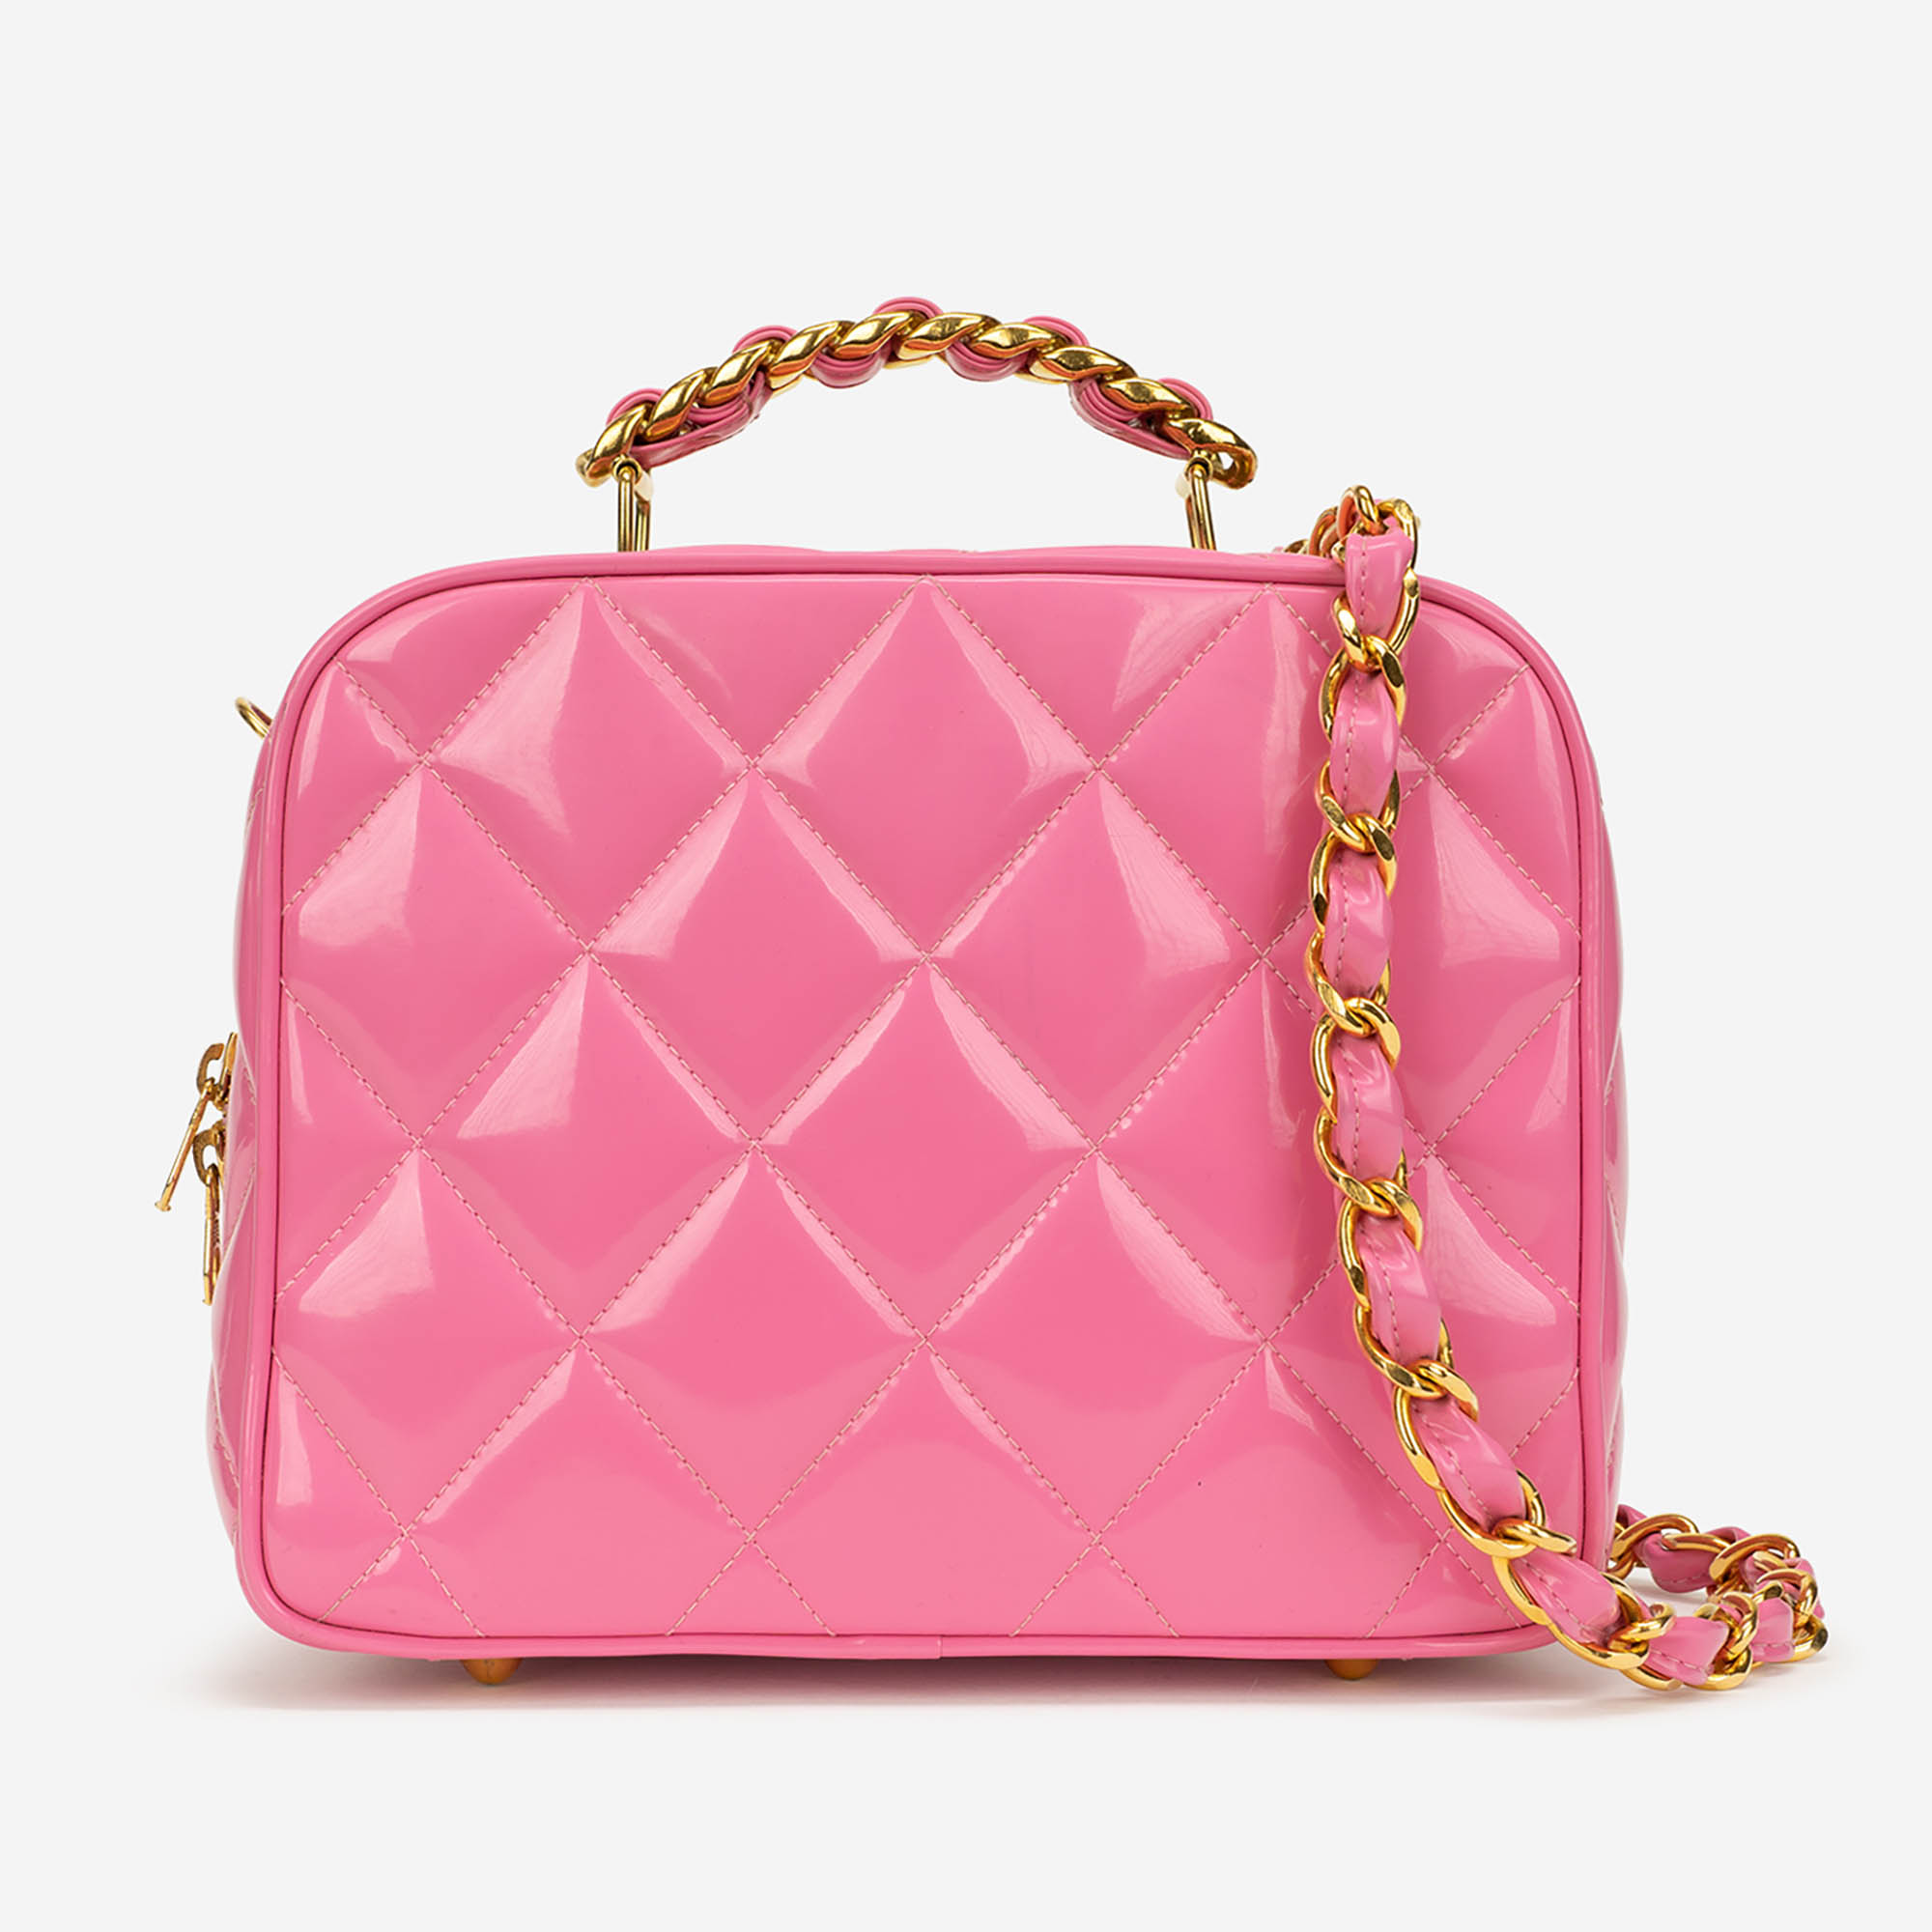 Rare Chanel Handbags to Collect Now